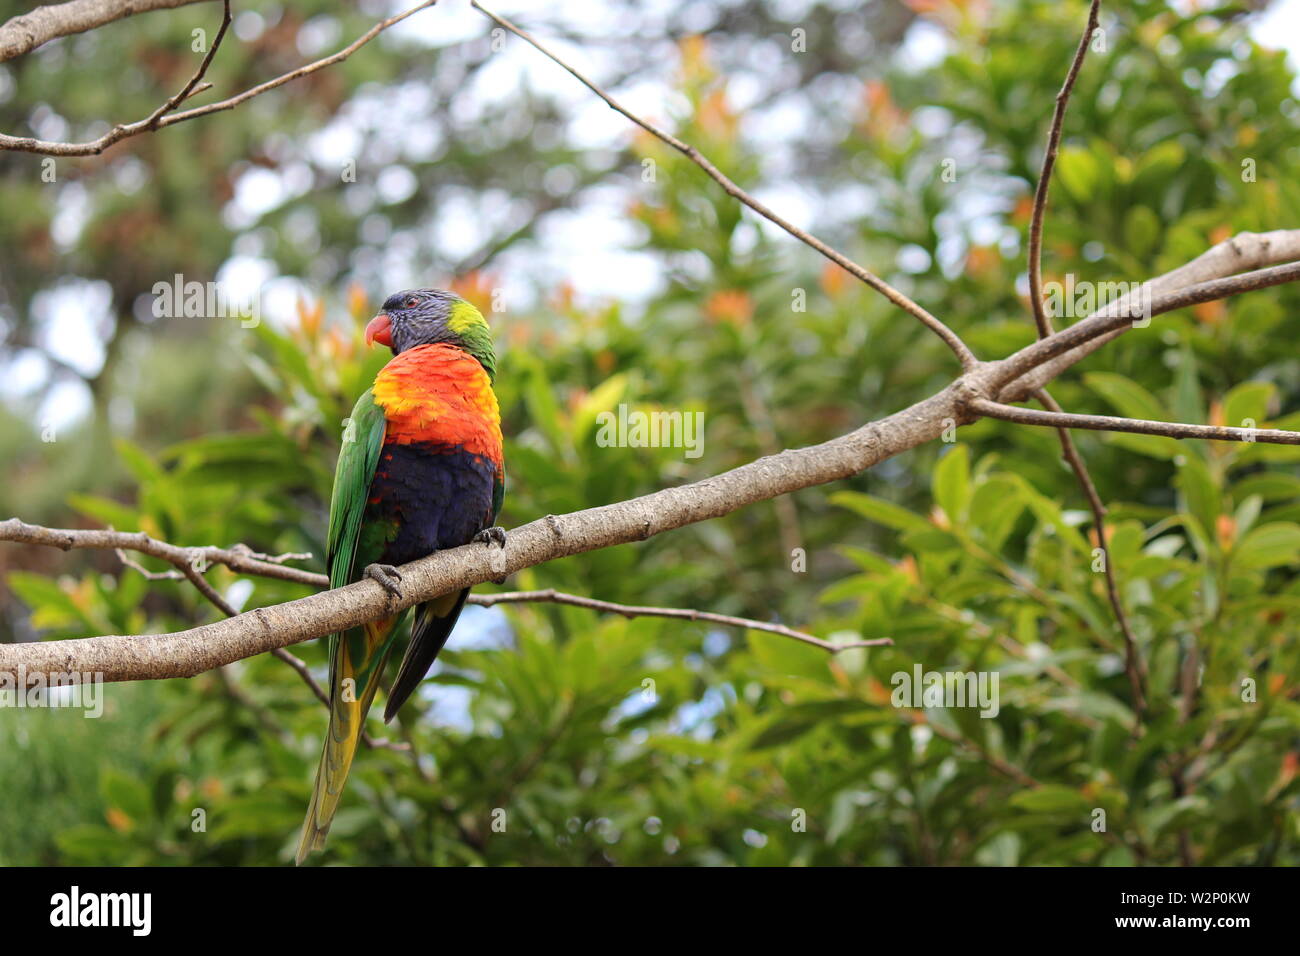 Single Australian Rainbow Lorikeet perched on a branch Stock Photo